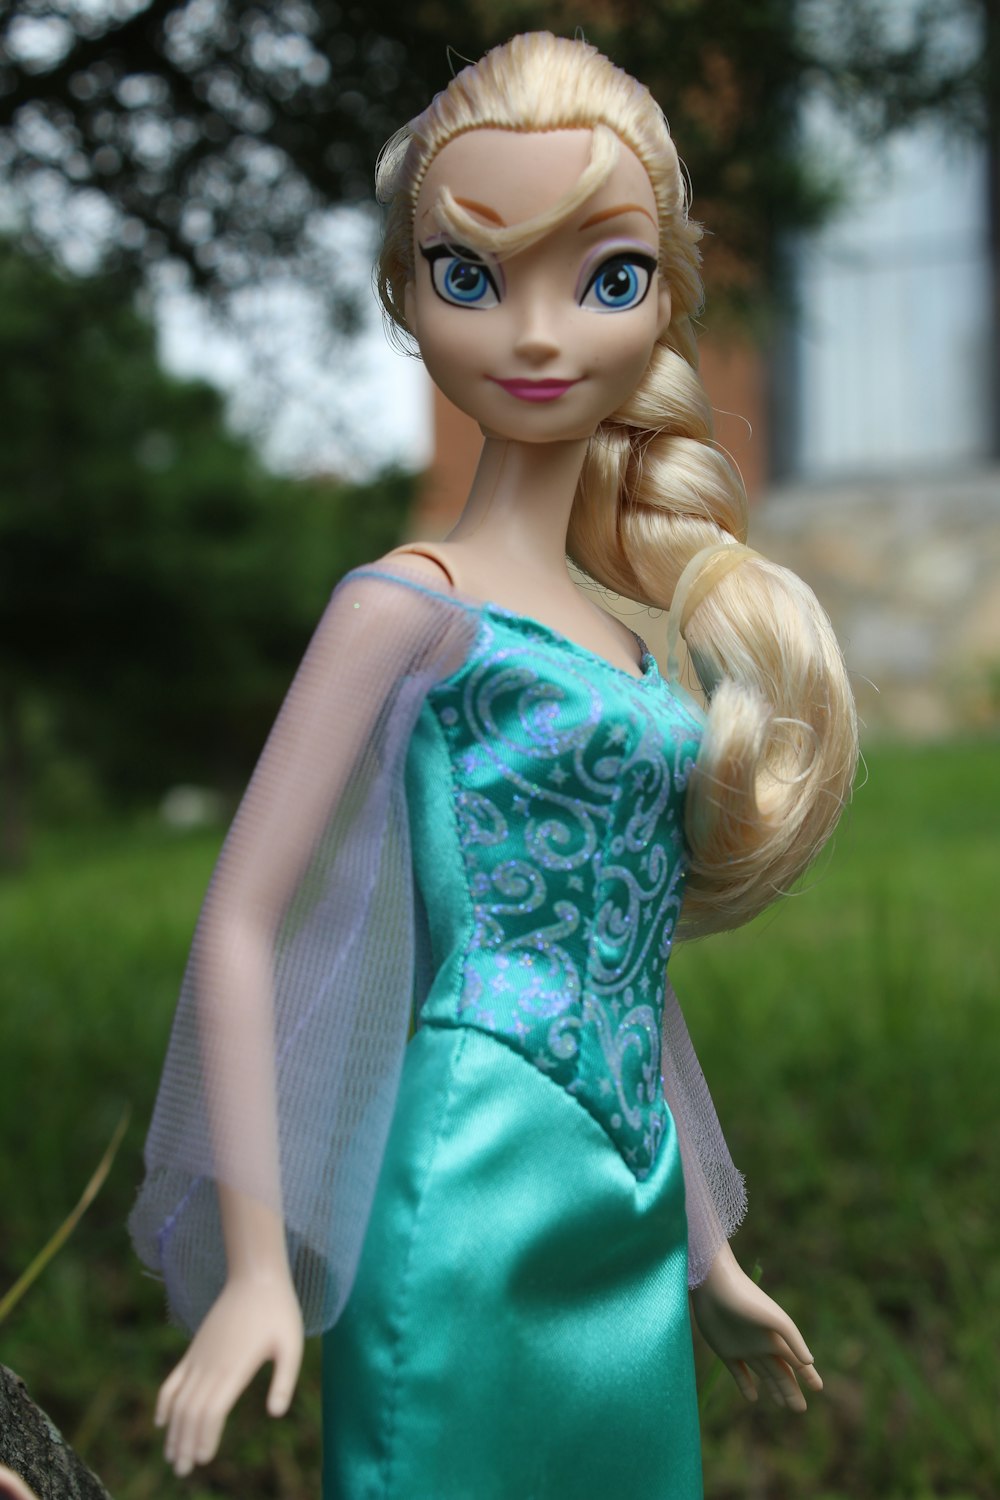 Frozen queen elsa doll photo – Free Doll Image on Unsplash